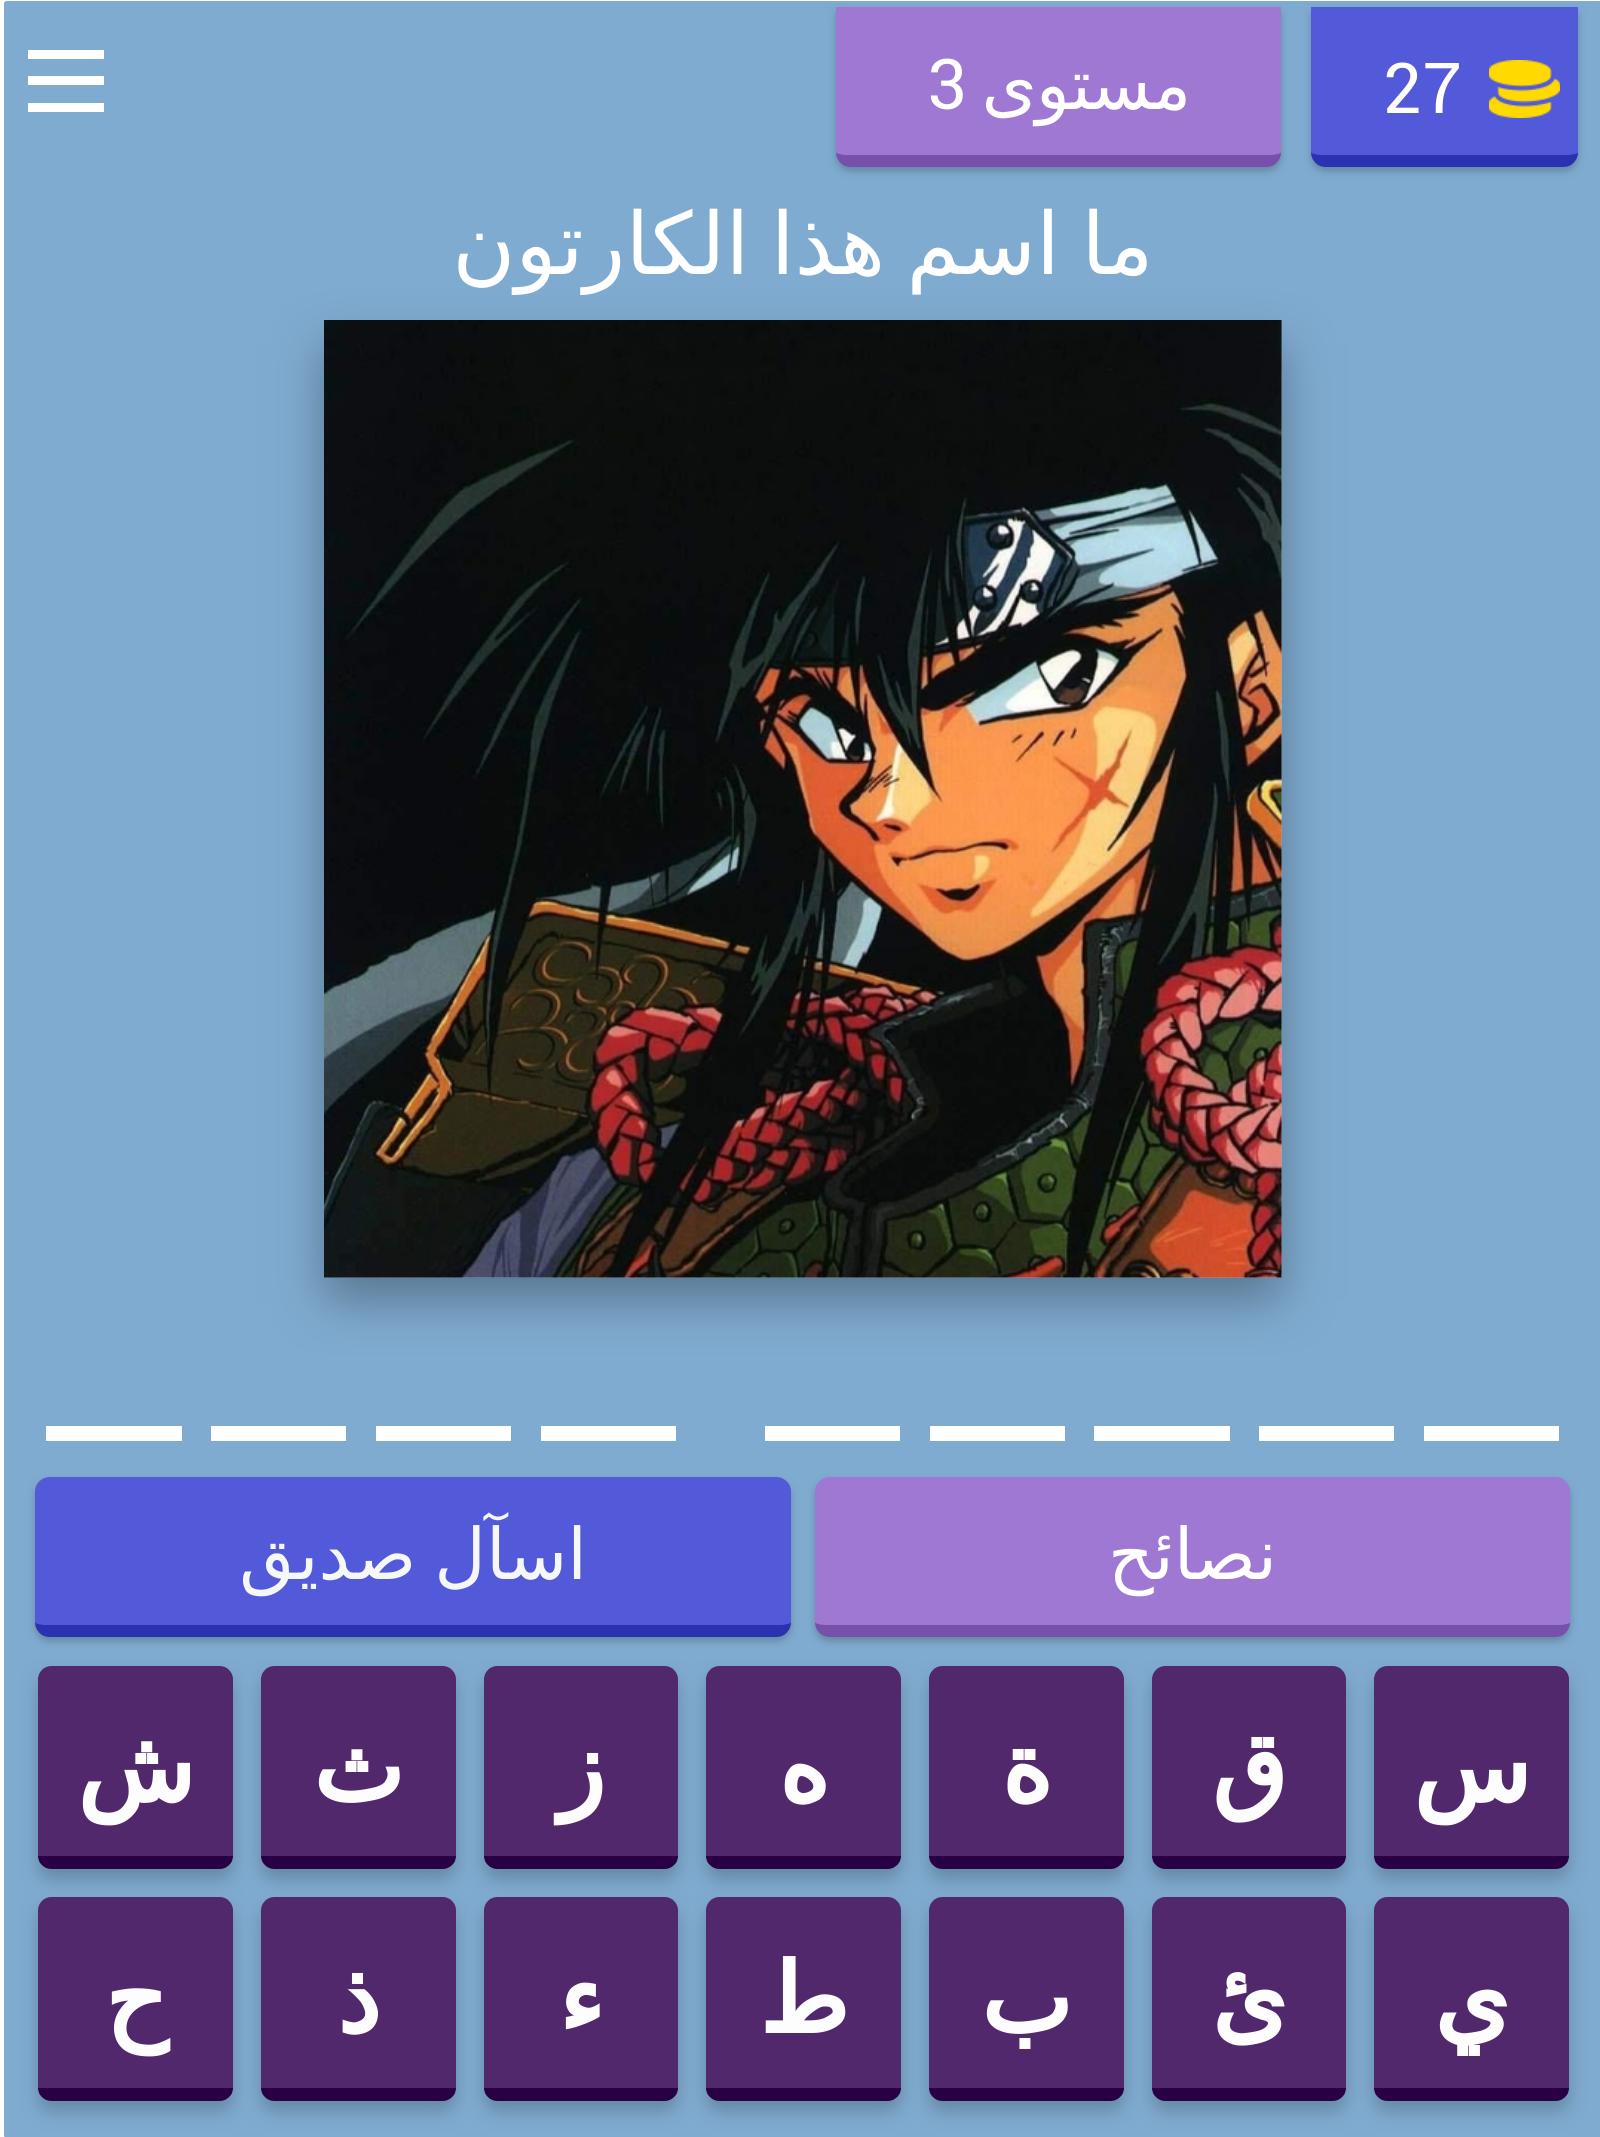 QUIZLOGO - Arabic Toon 8.4.3z Screenshot 11